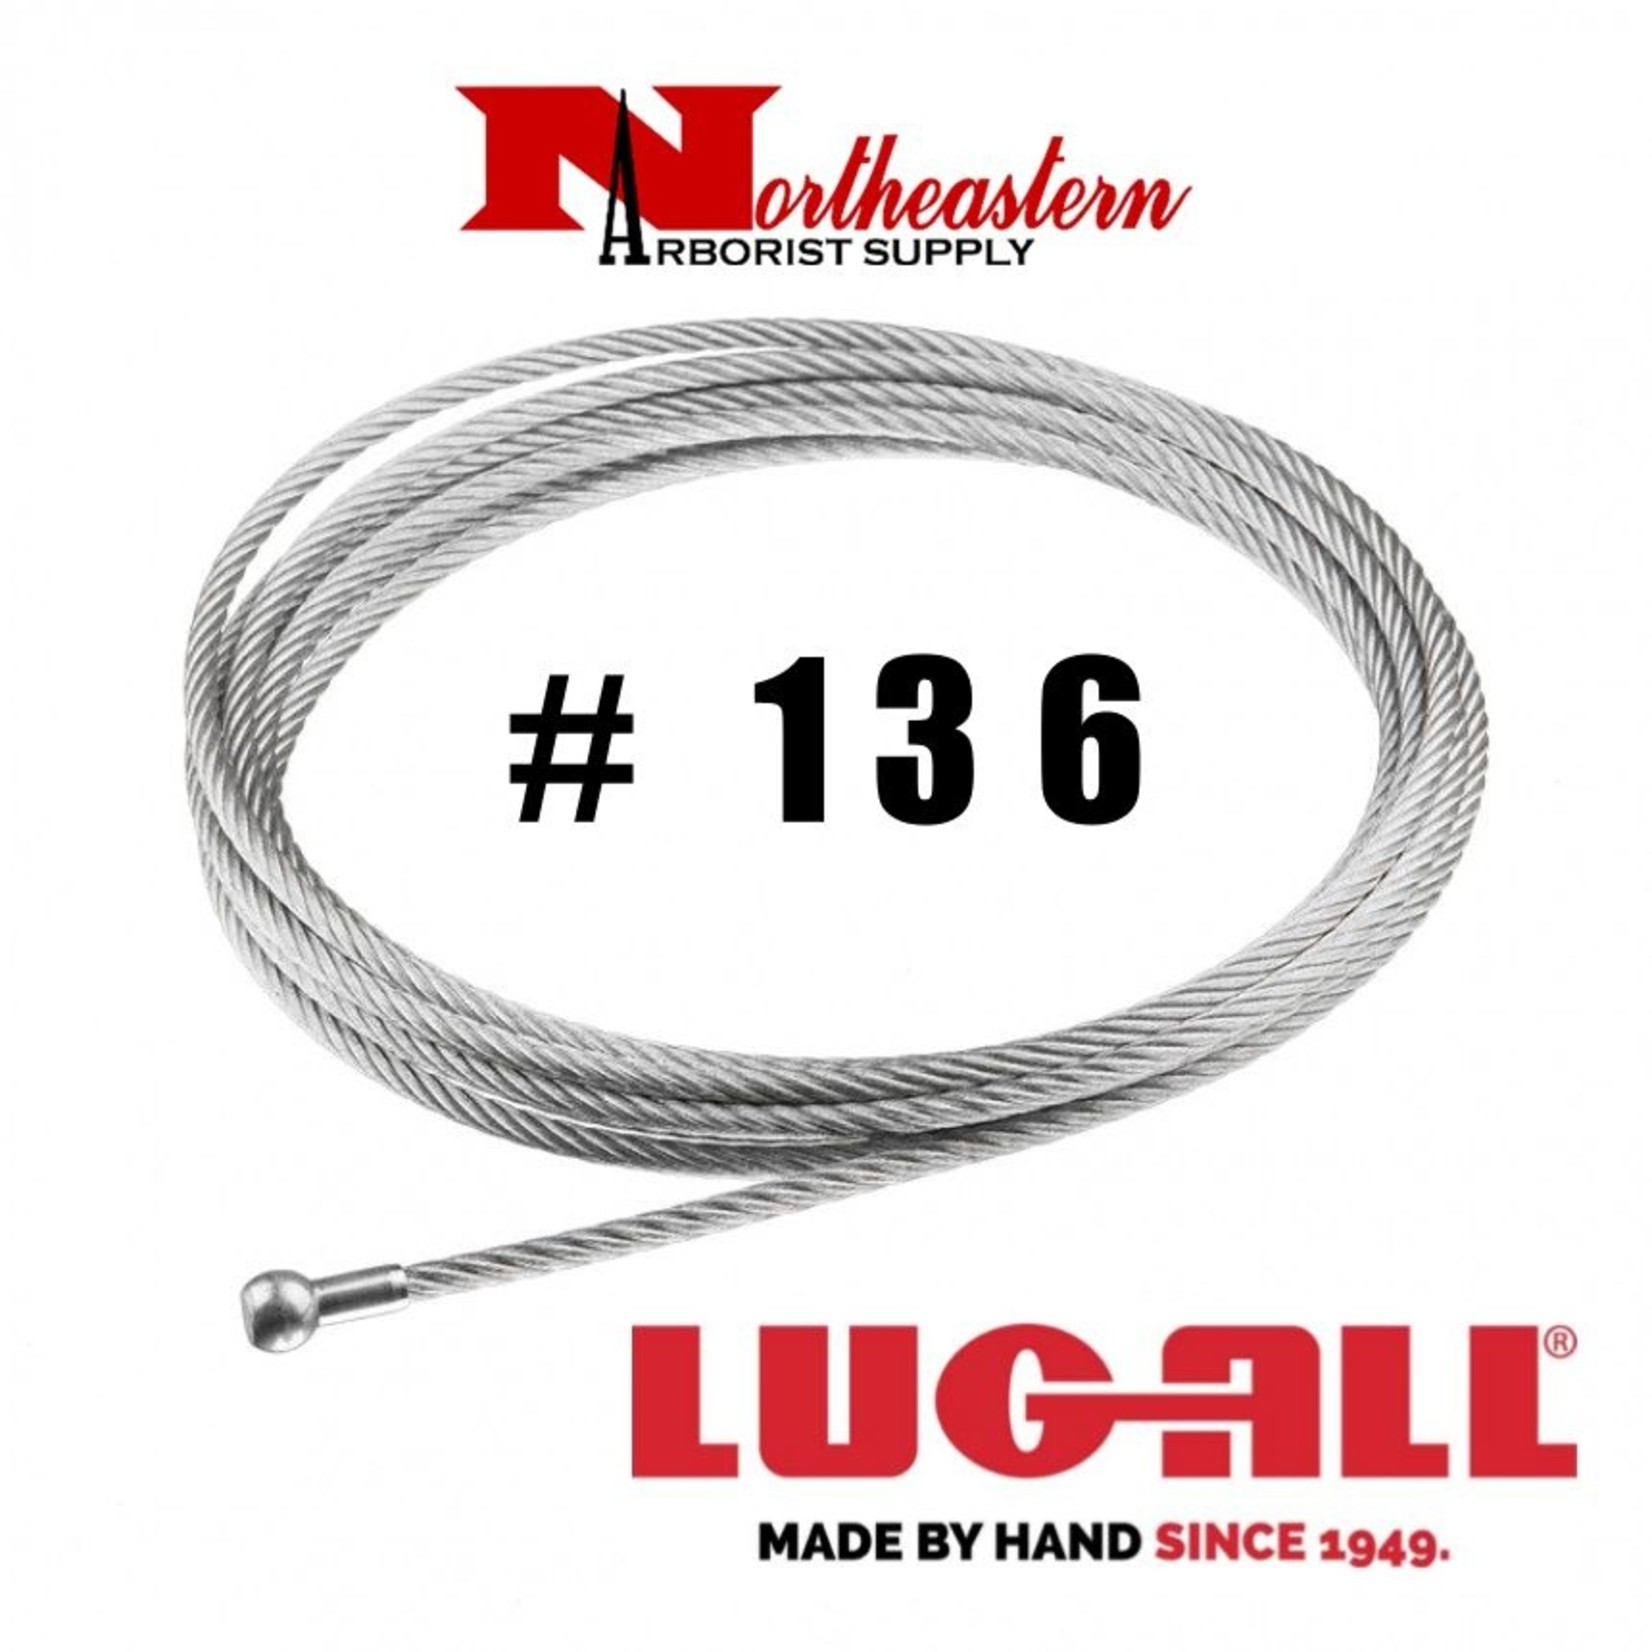 LUG-ALL Lug-All Cable, 3/16" with Drum Anchor